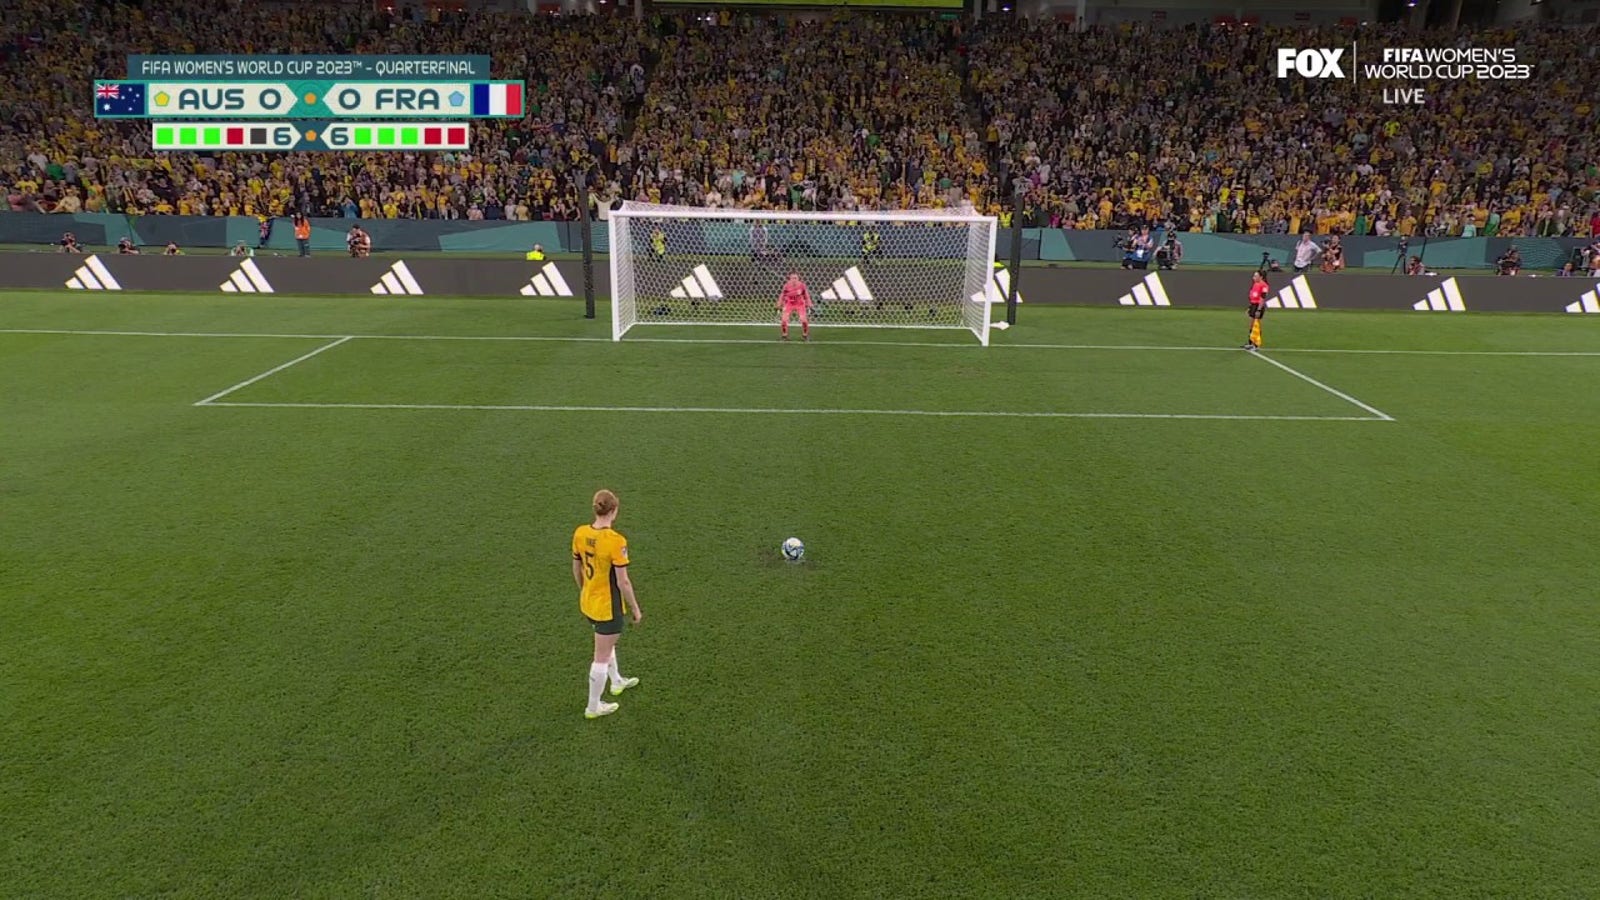 Australia advances to semifinals after penalty shootout vs. France